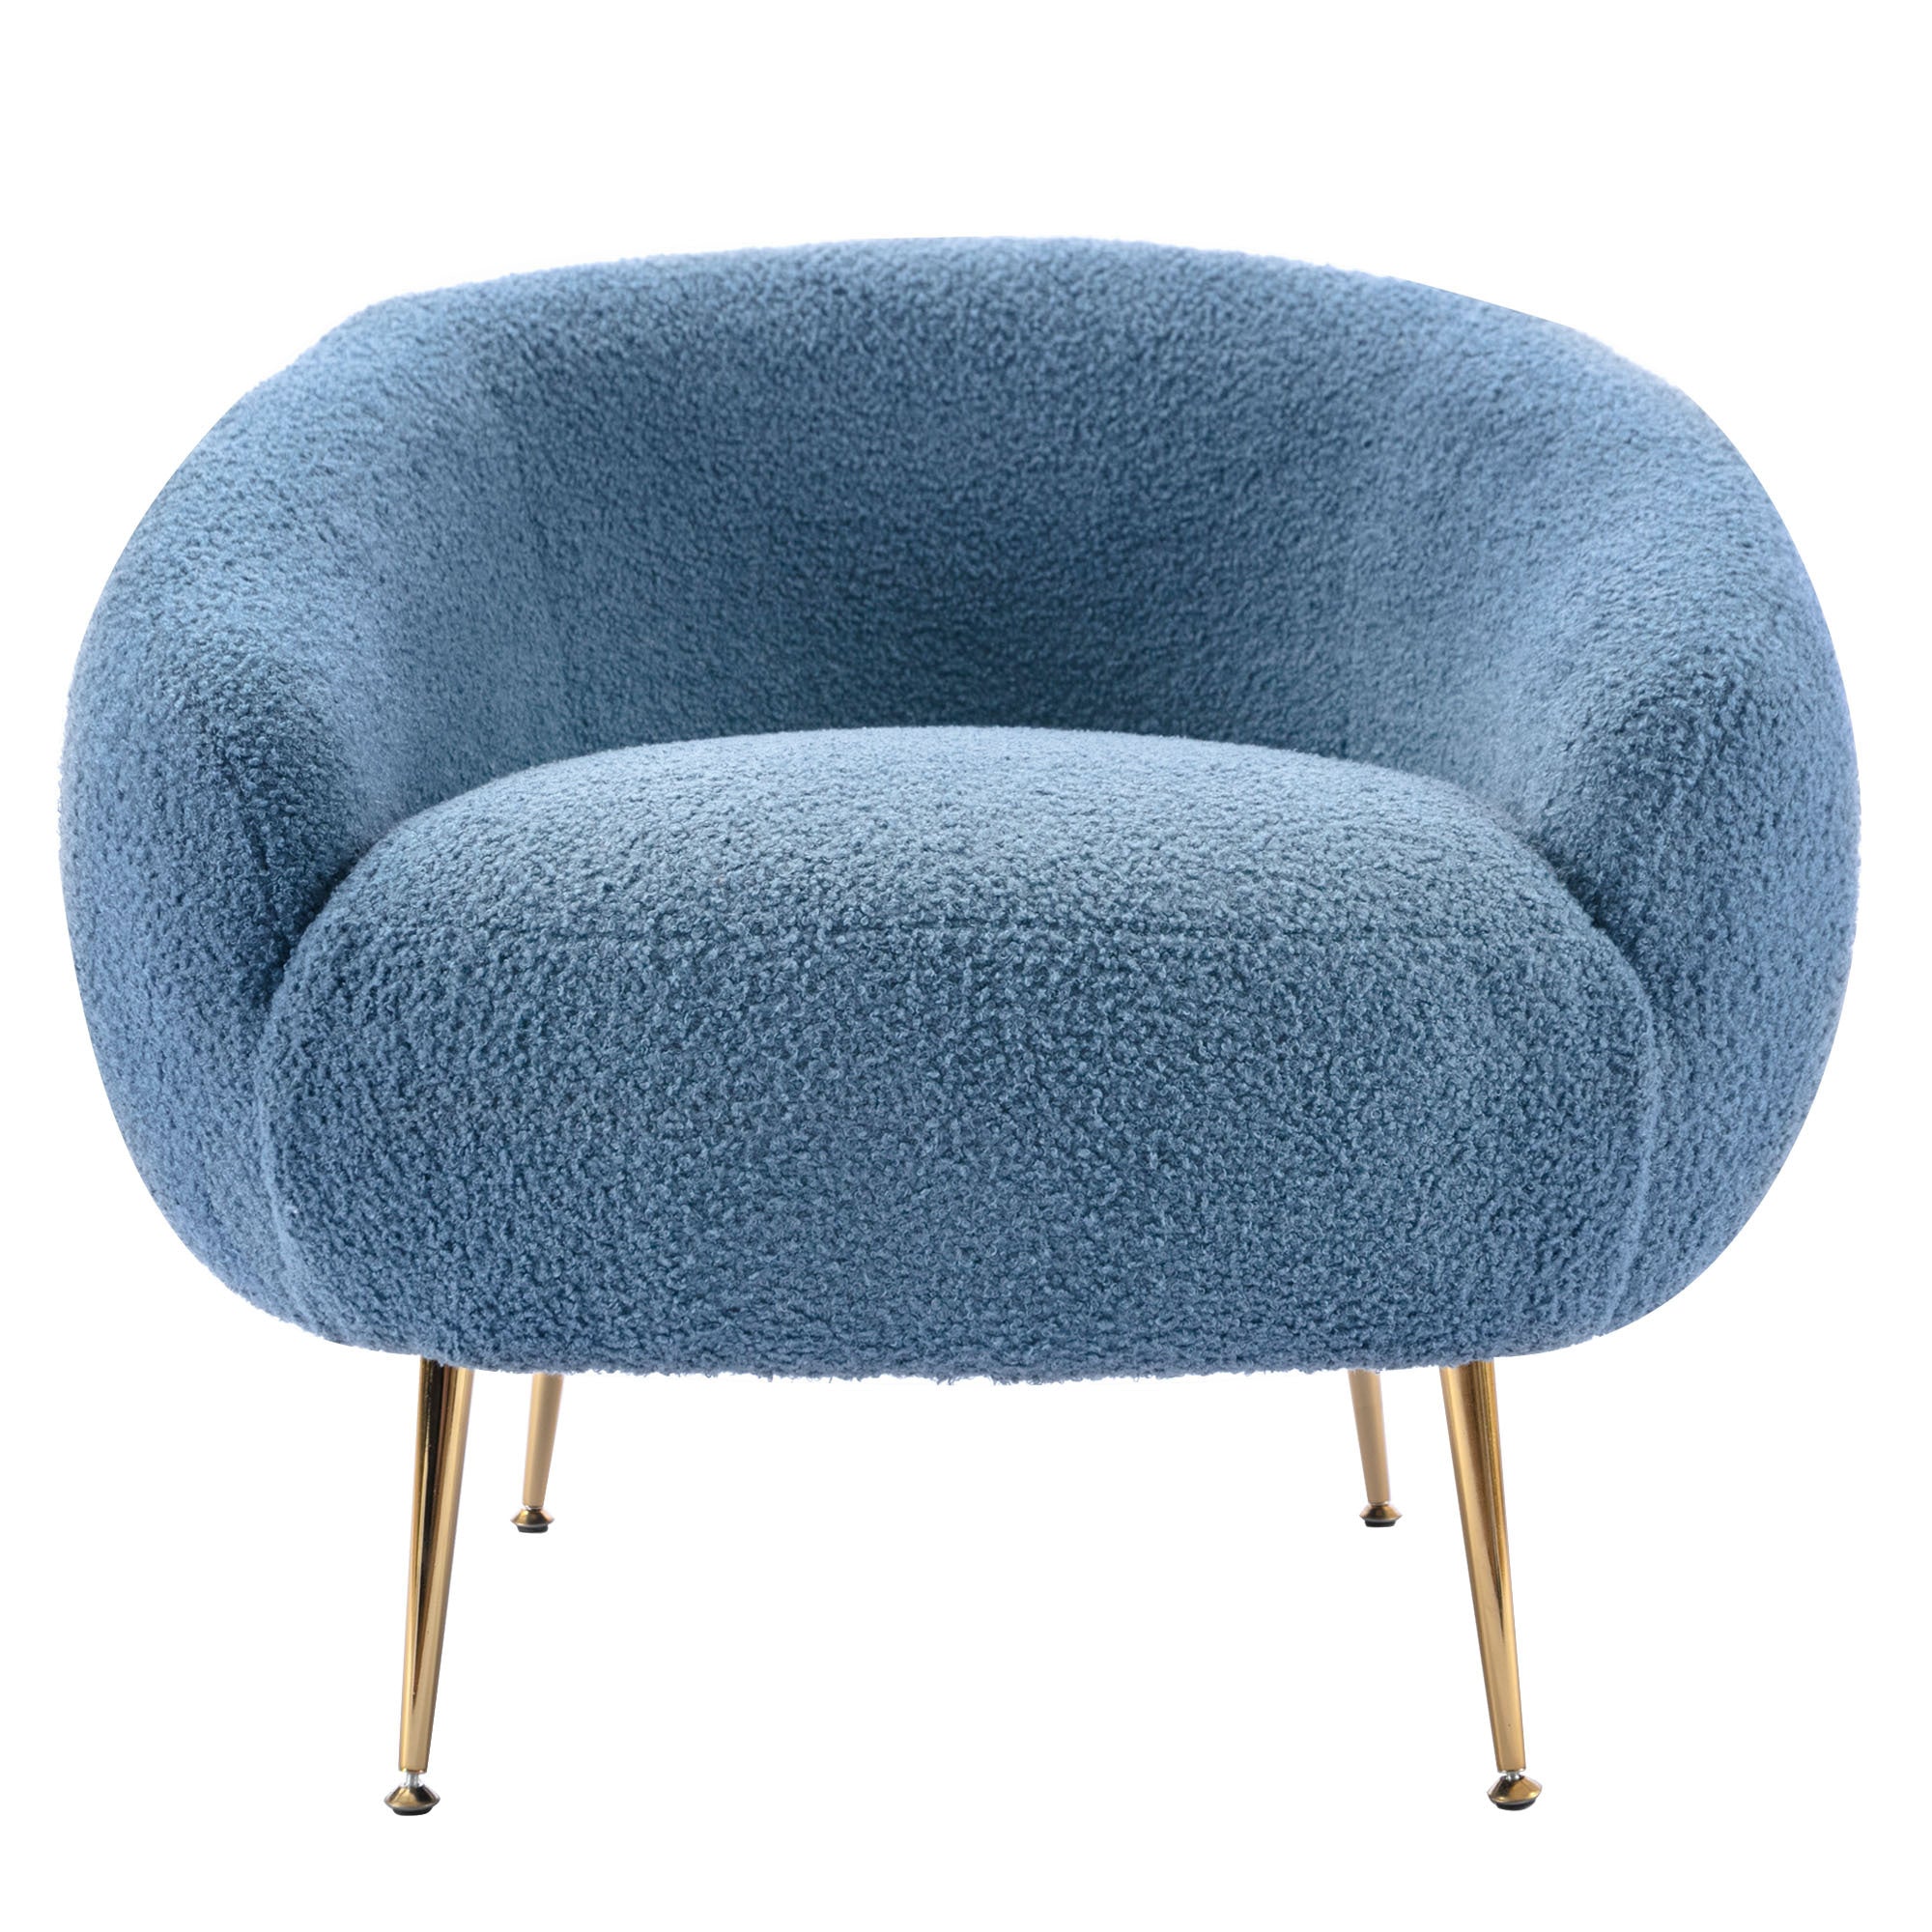 Orisfur. Modern Comfy Leisure Accent Chair, Teddy dark blue-foam-altay velvet